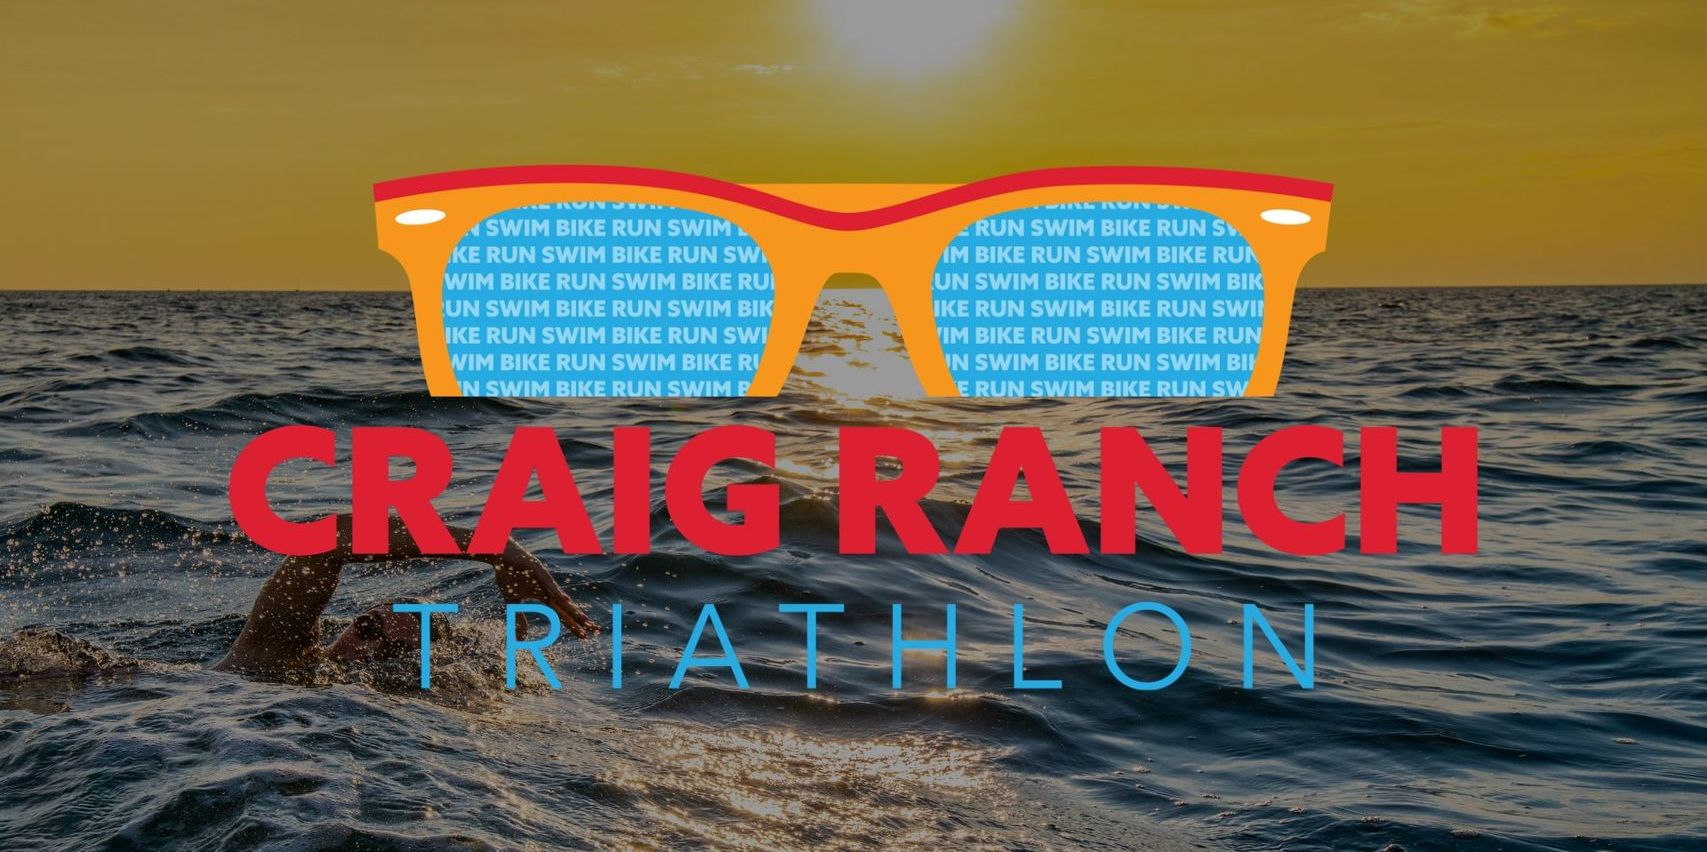 Craig Ranch Triathlon promotional image